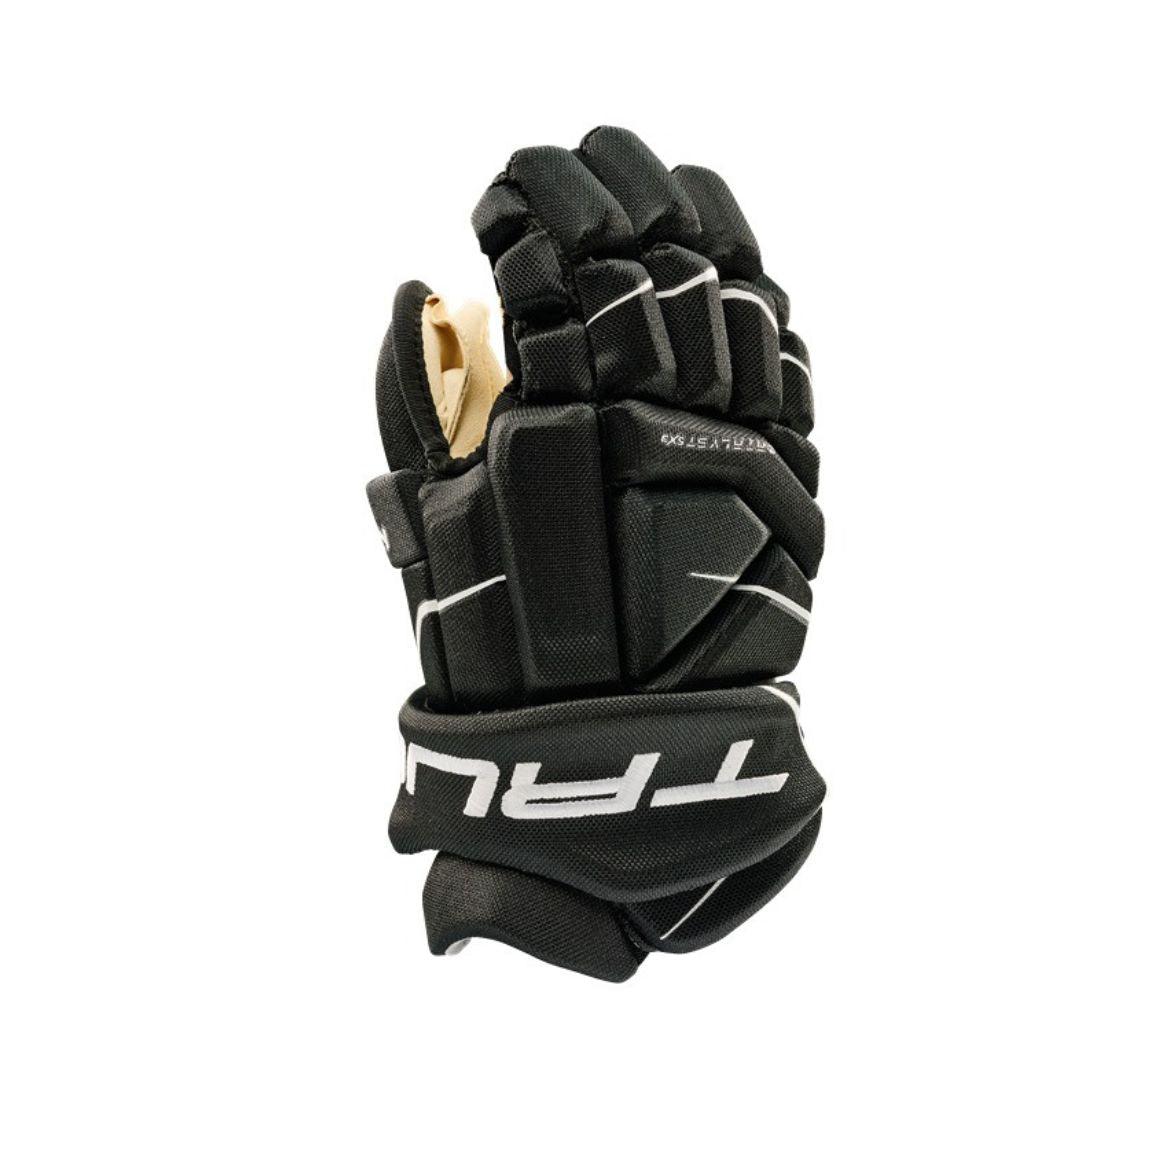 True Catalyst 5X3 Hockey Gloves - Senior - Sports Excellence